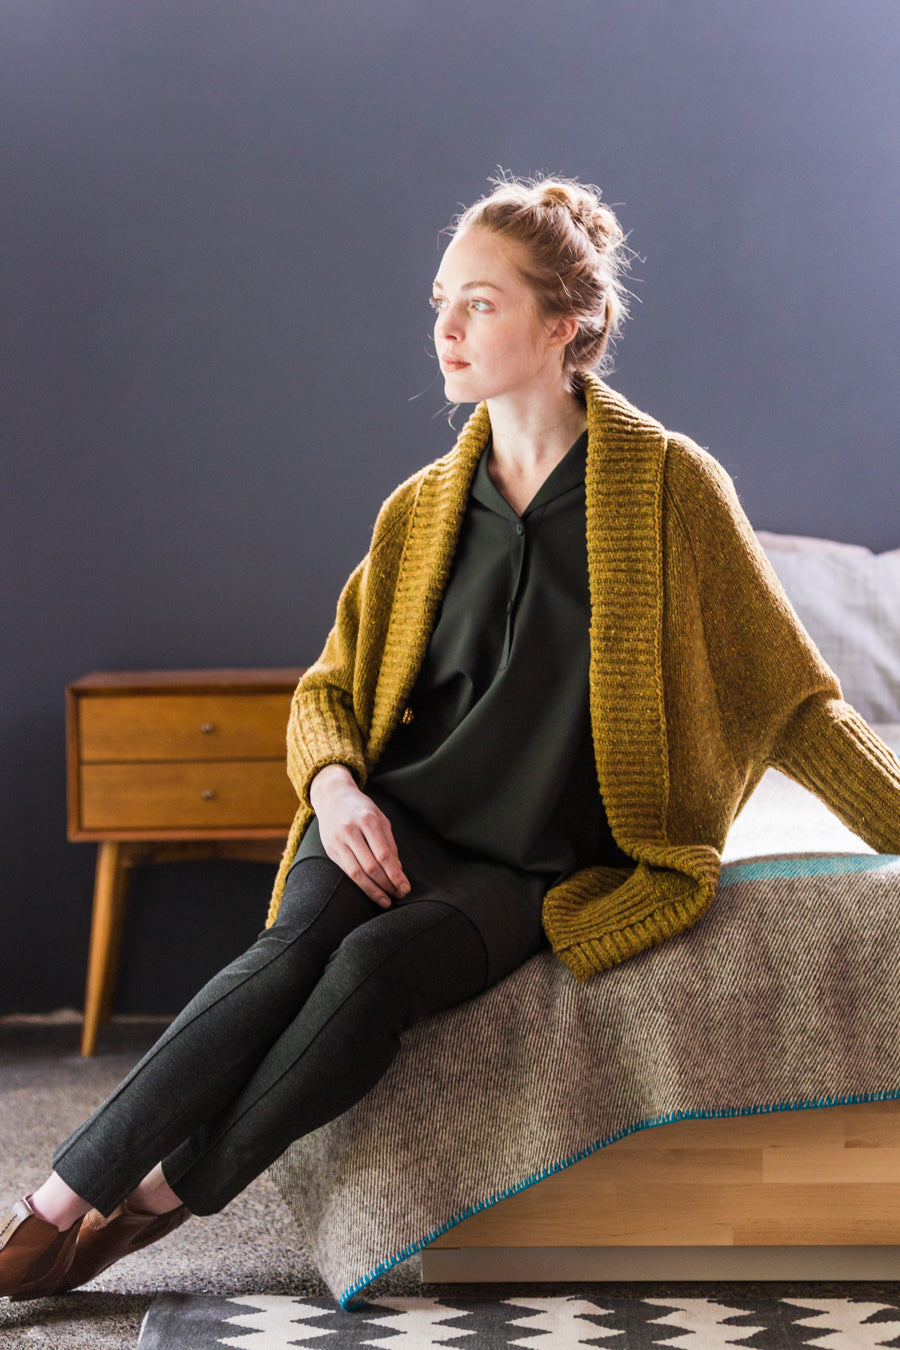 Ronan Cardigan | Knitting Pattern by Andrea Mowry